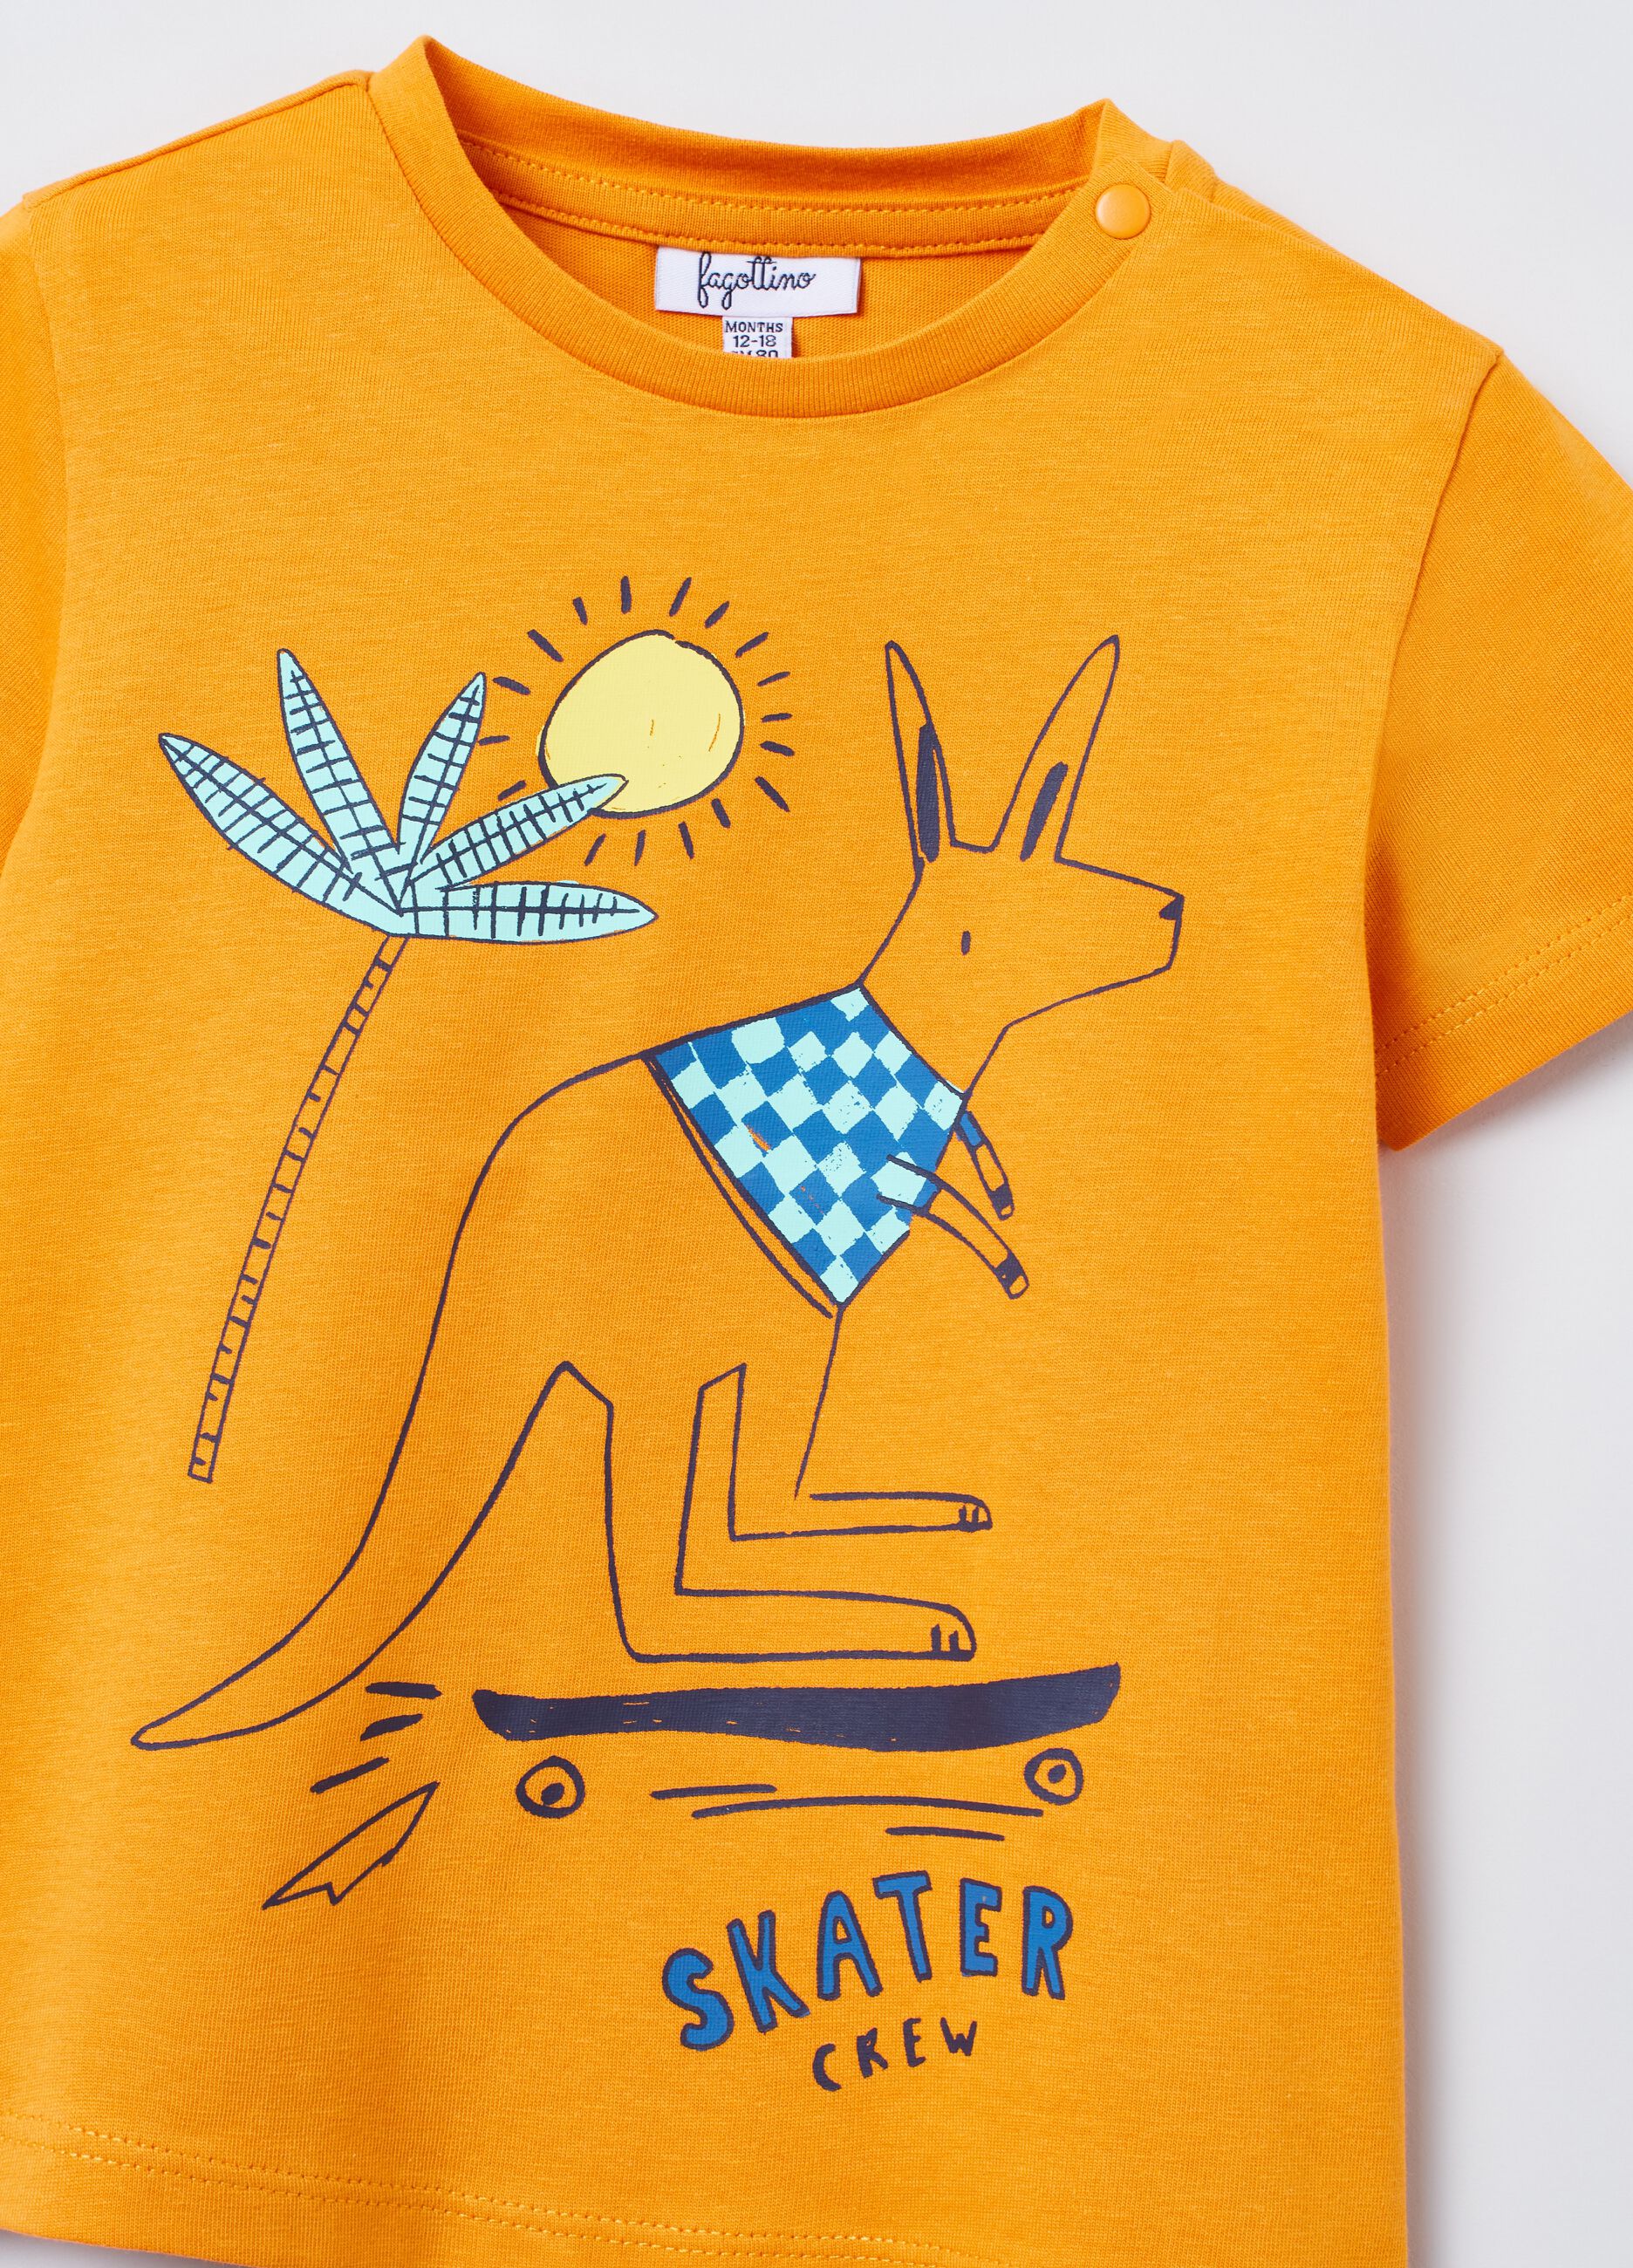 Cotton T-shirt with kangaroo skater print